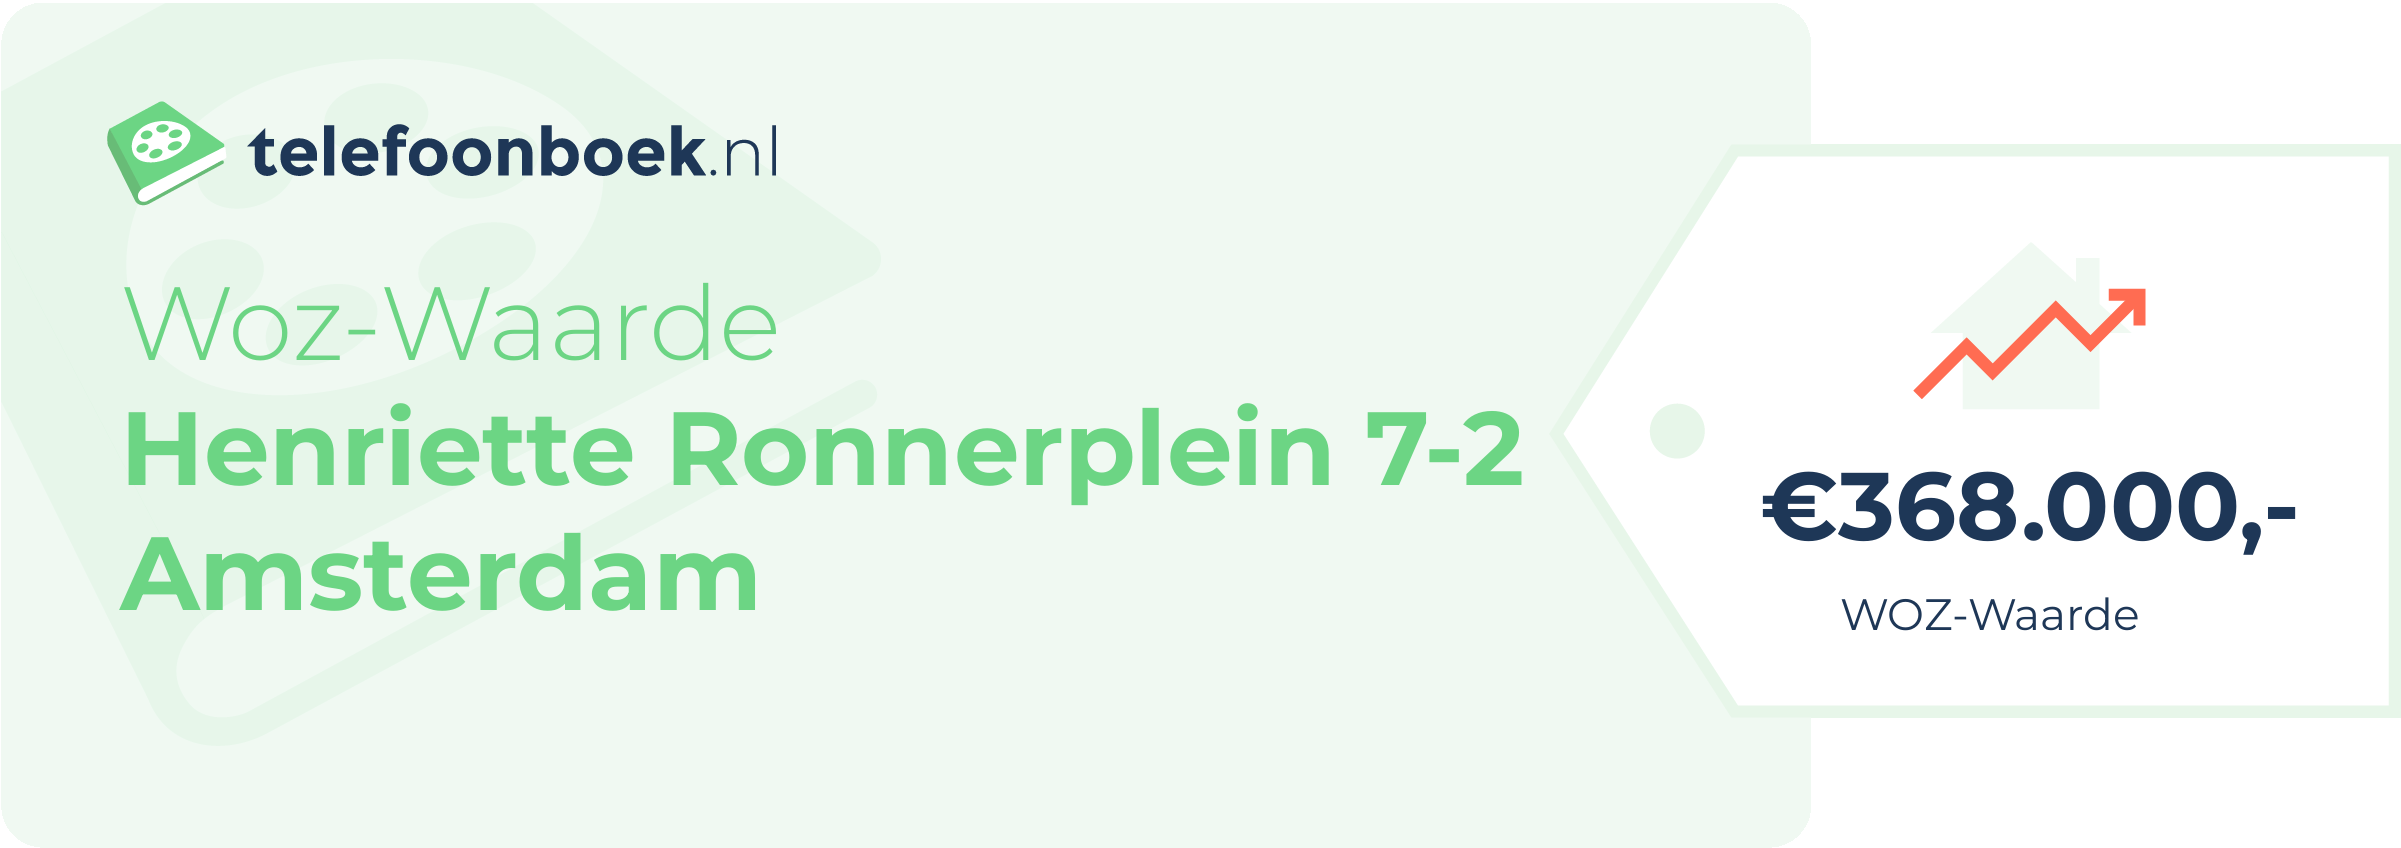 WOZ-waarde Henriette Ronnerplein 7-2 Amsterdam